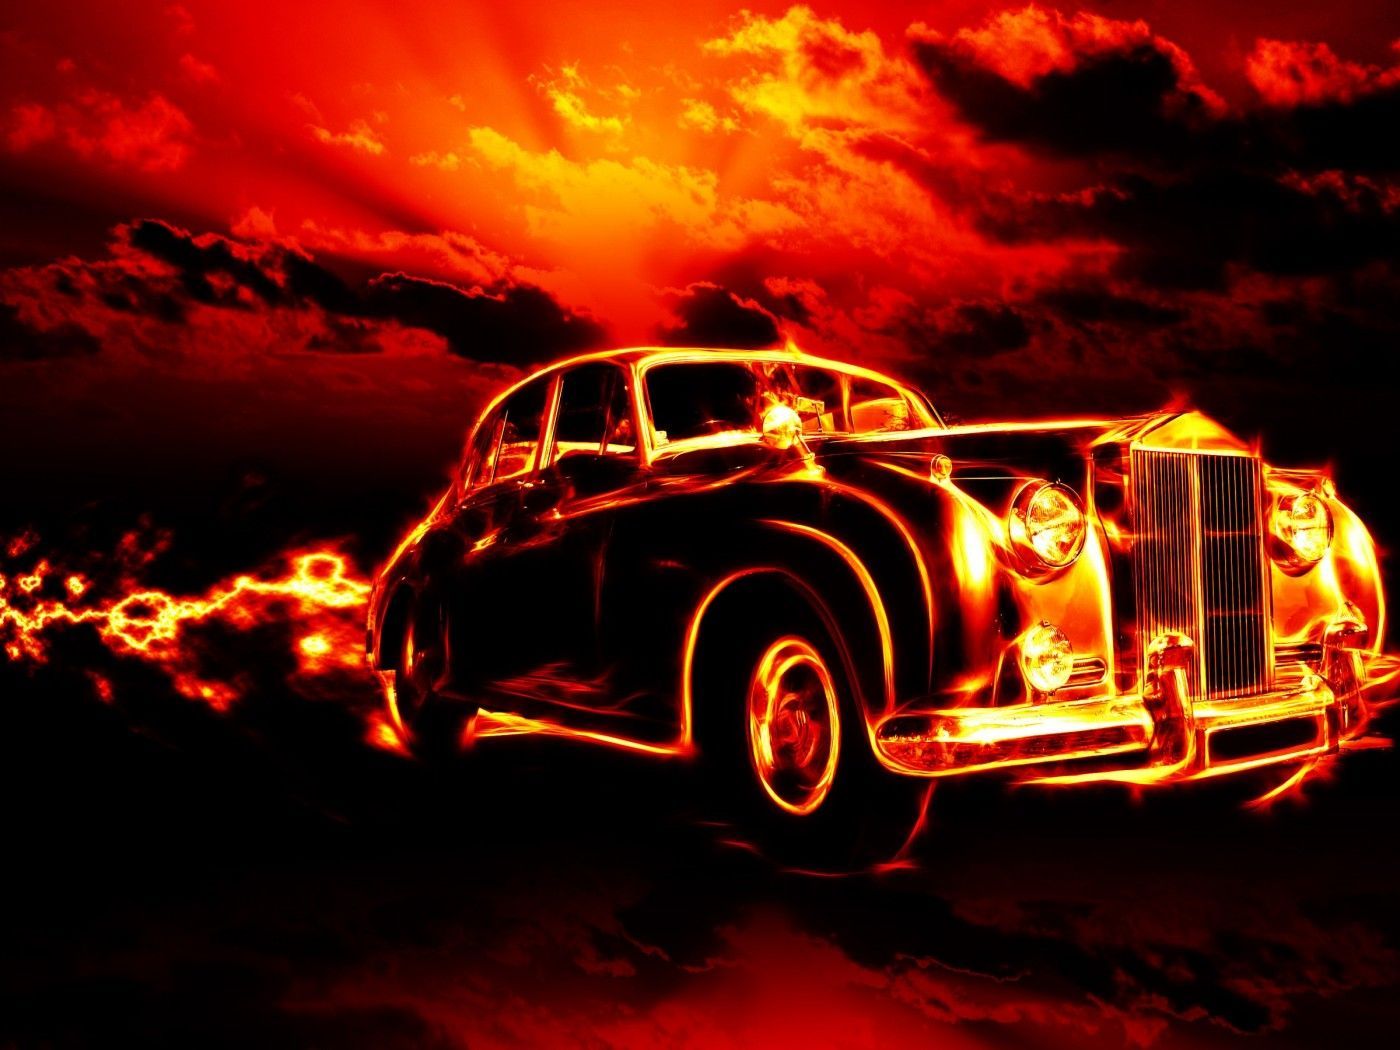 Vintage Car in Fire HD Wallpaper.Download High Definition wallpaper of Vintage Car in Fire in all standa. New car wallpaper, Computer wallpaper, Desktop wallpaper